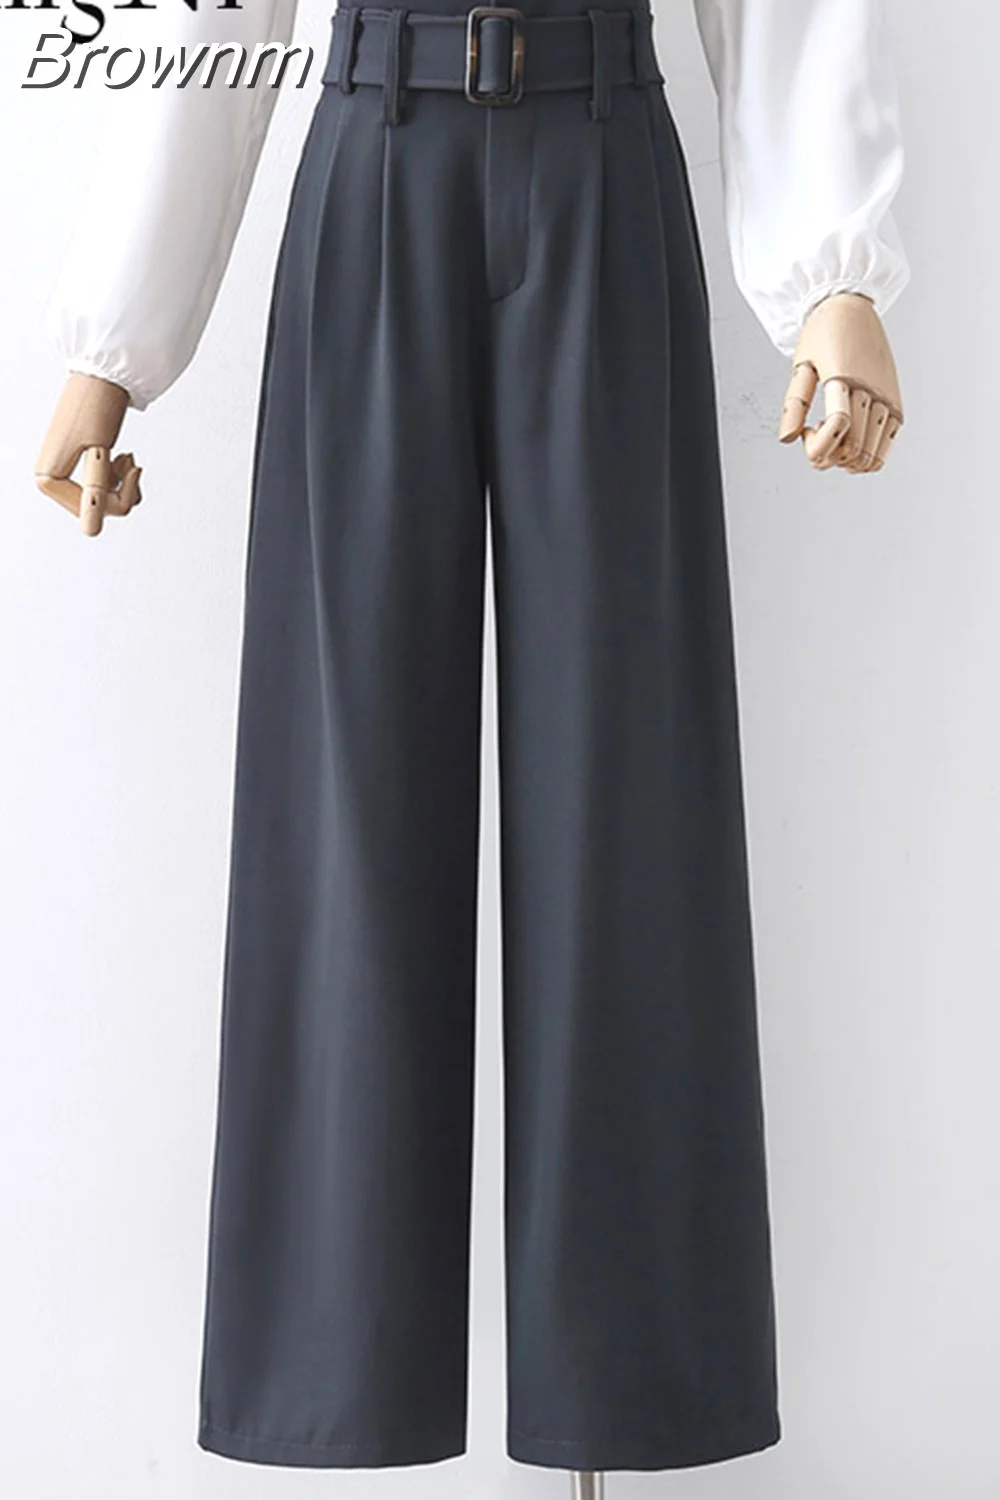 Brownm Female High Waist Wide Leg Pants Loose Casual Belt Fashion 2023 Spring Autumn Long Suit Pants Womens Black Trousers OL